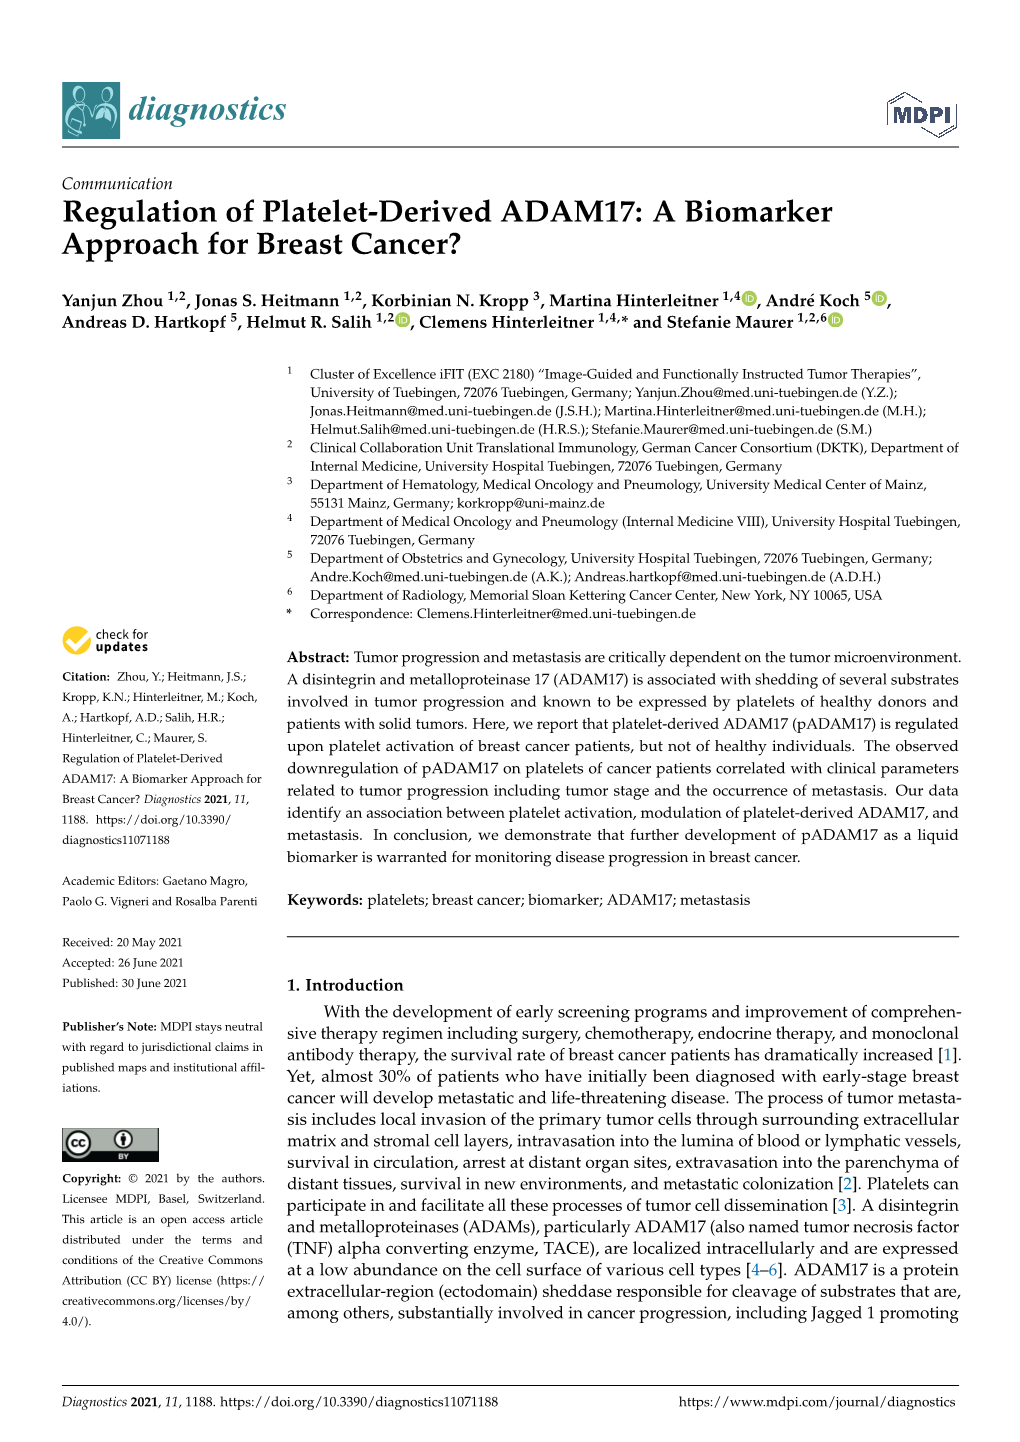 Regulation of Platelet-Derived ADAM17: a Biomarker Approach for Breast Cancer?